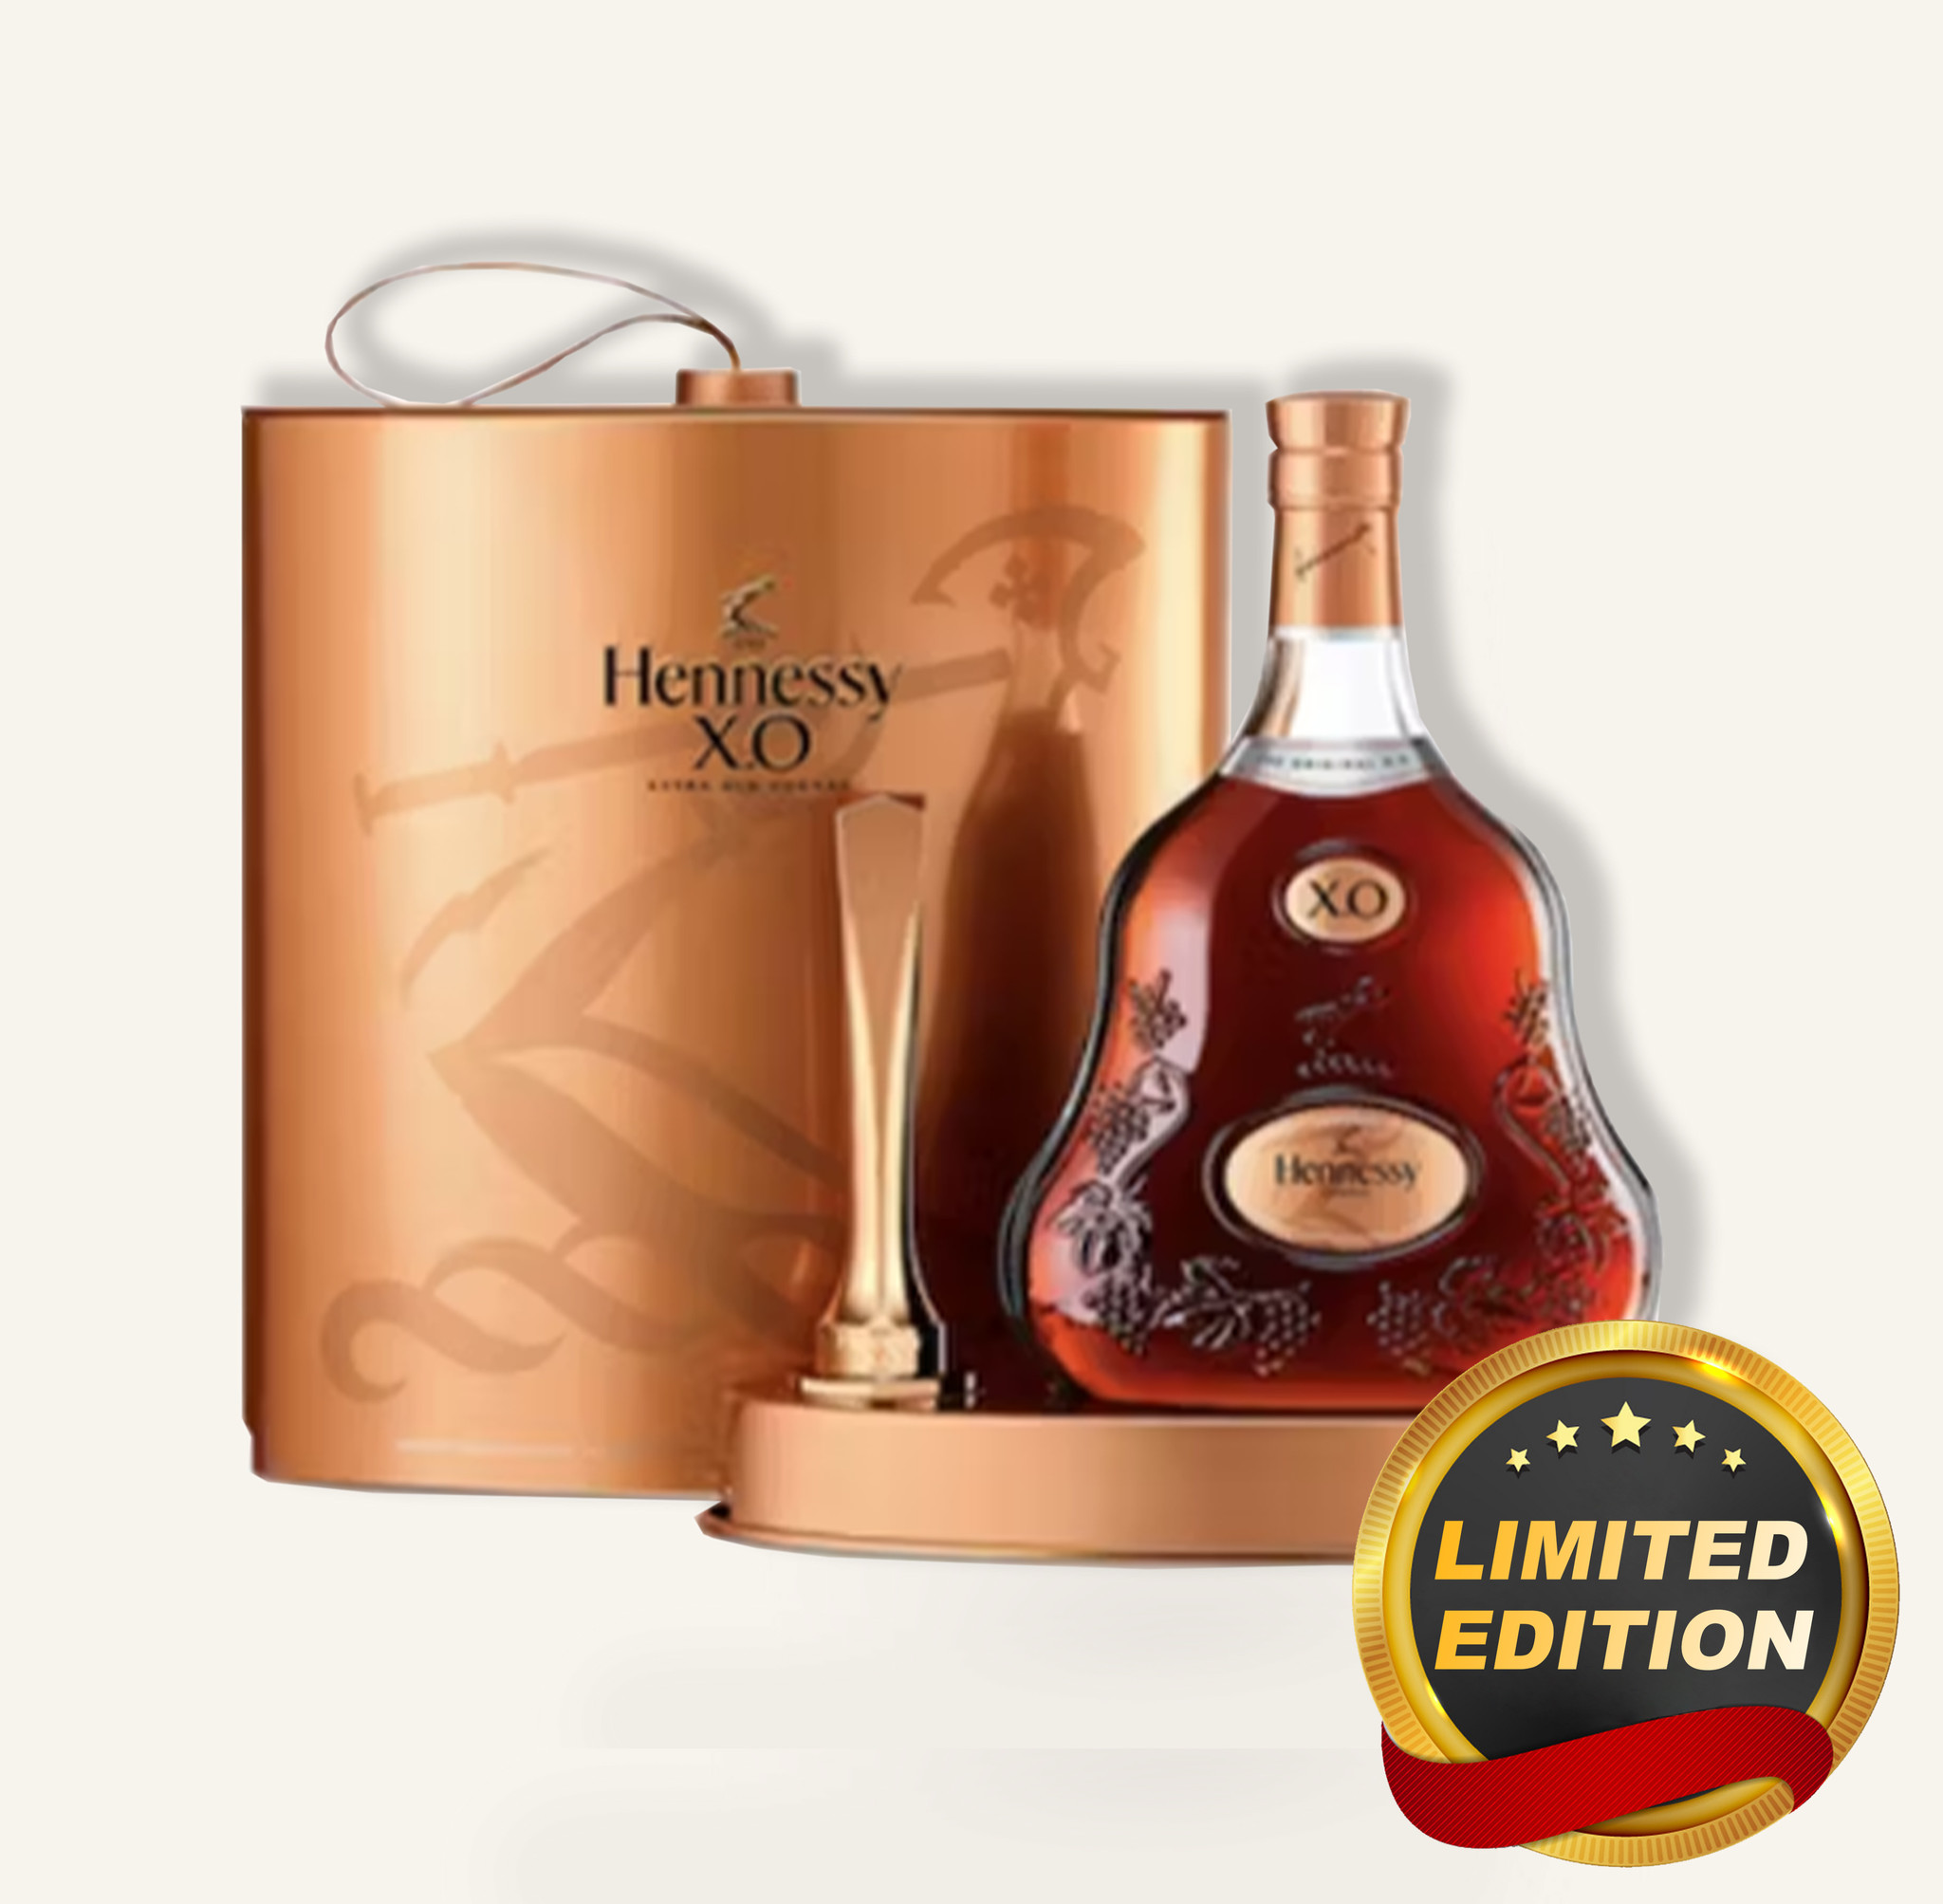 Where to buy Hennessy X.O. Kim Jones Limited Edition Cognac